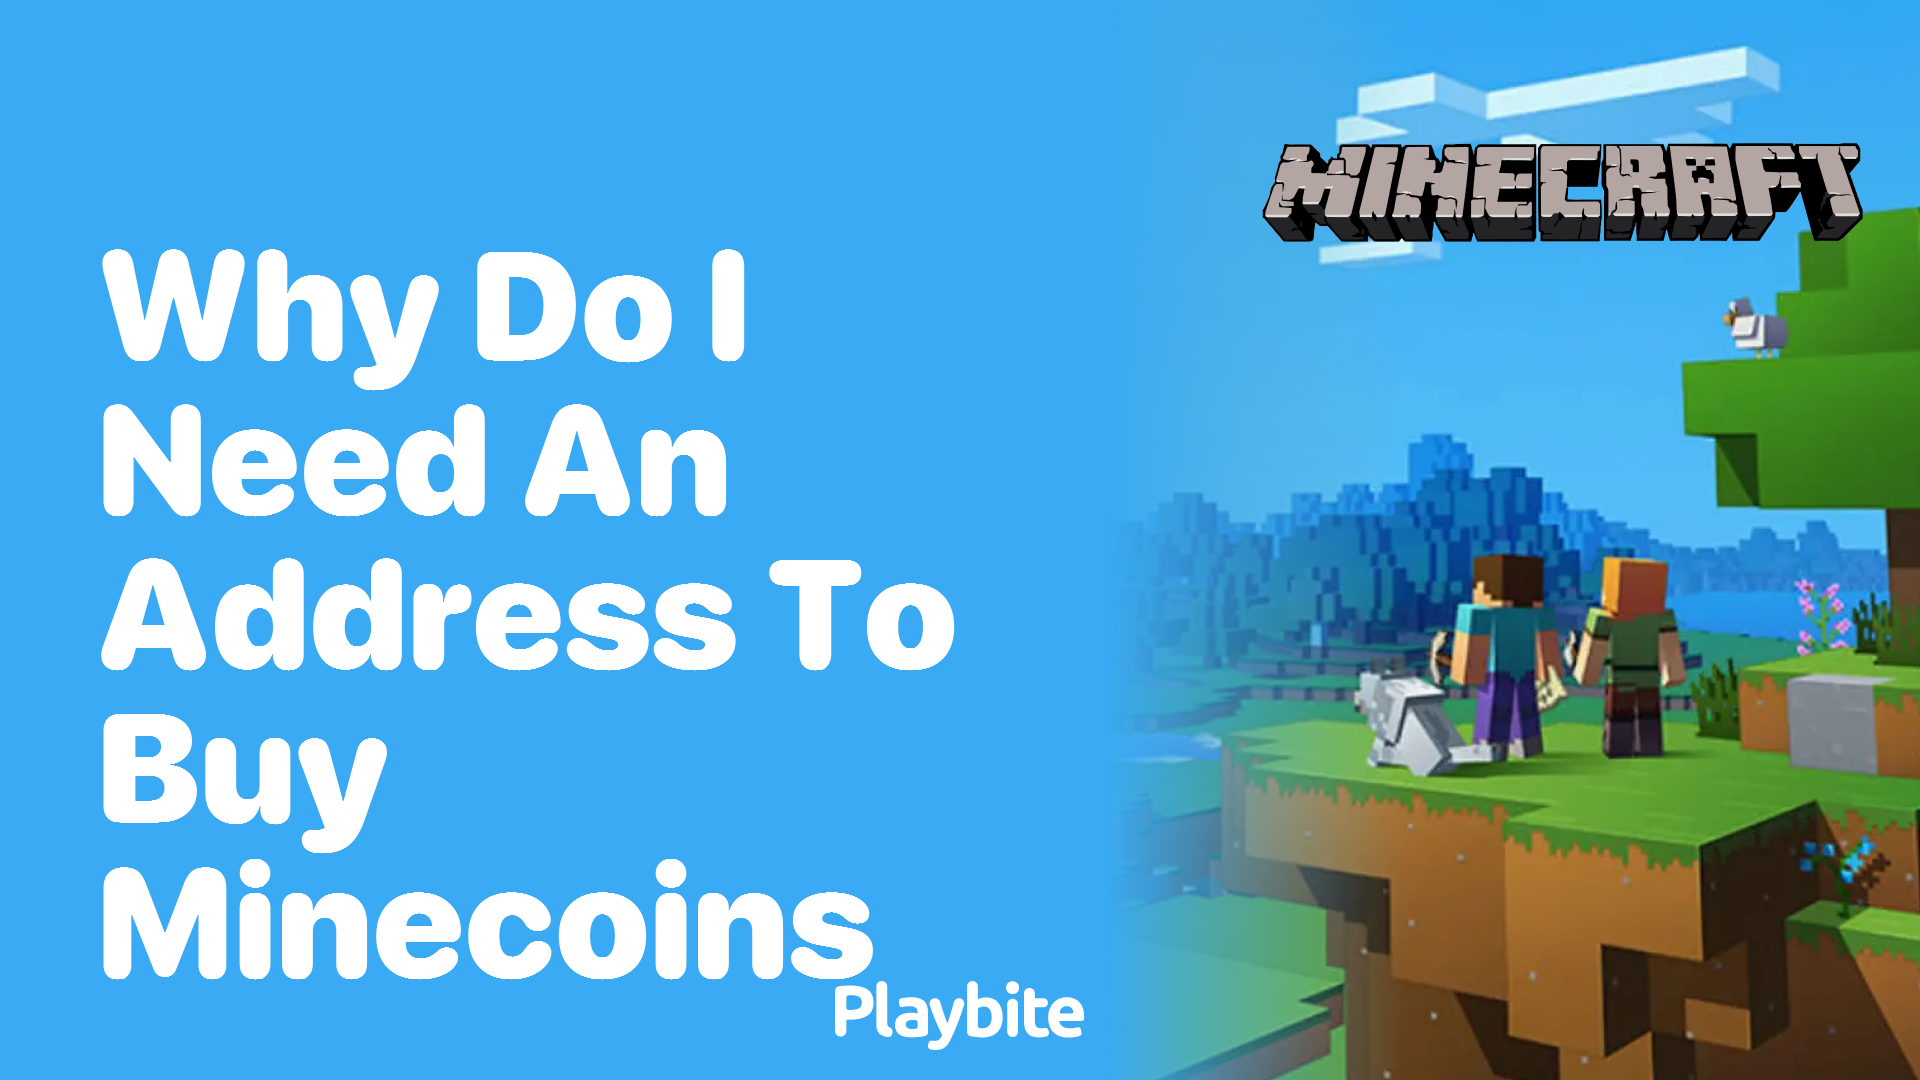 Why Do I Need an Address to Buy Minecoins?